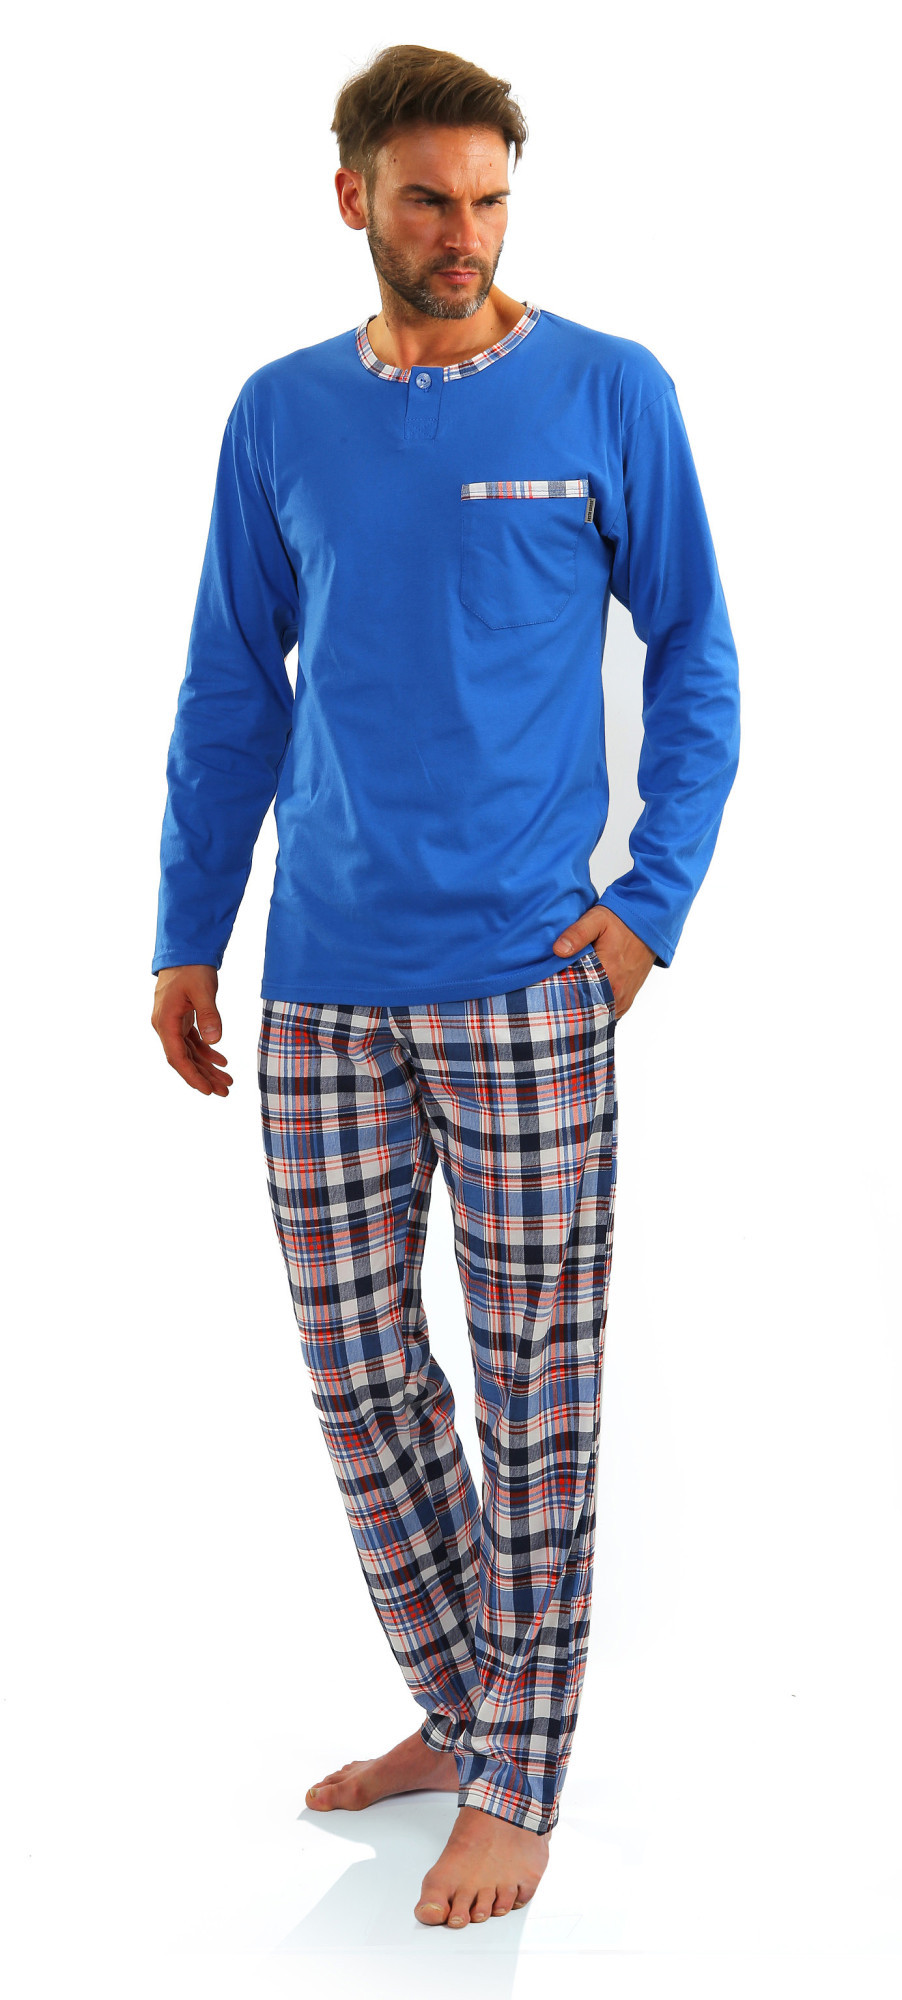 Sesto Senso Pánské pyžamo dlouhé Jasiek 2243/09 modrá XL